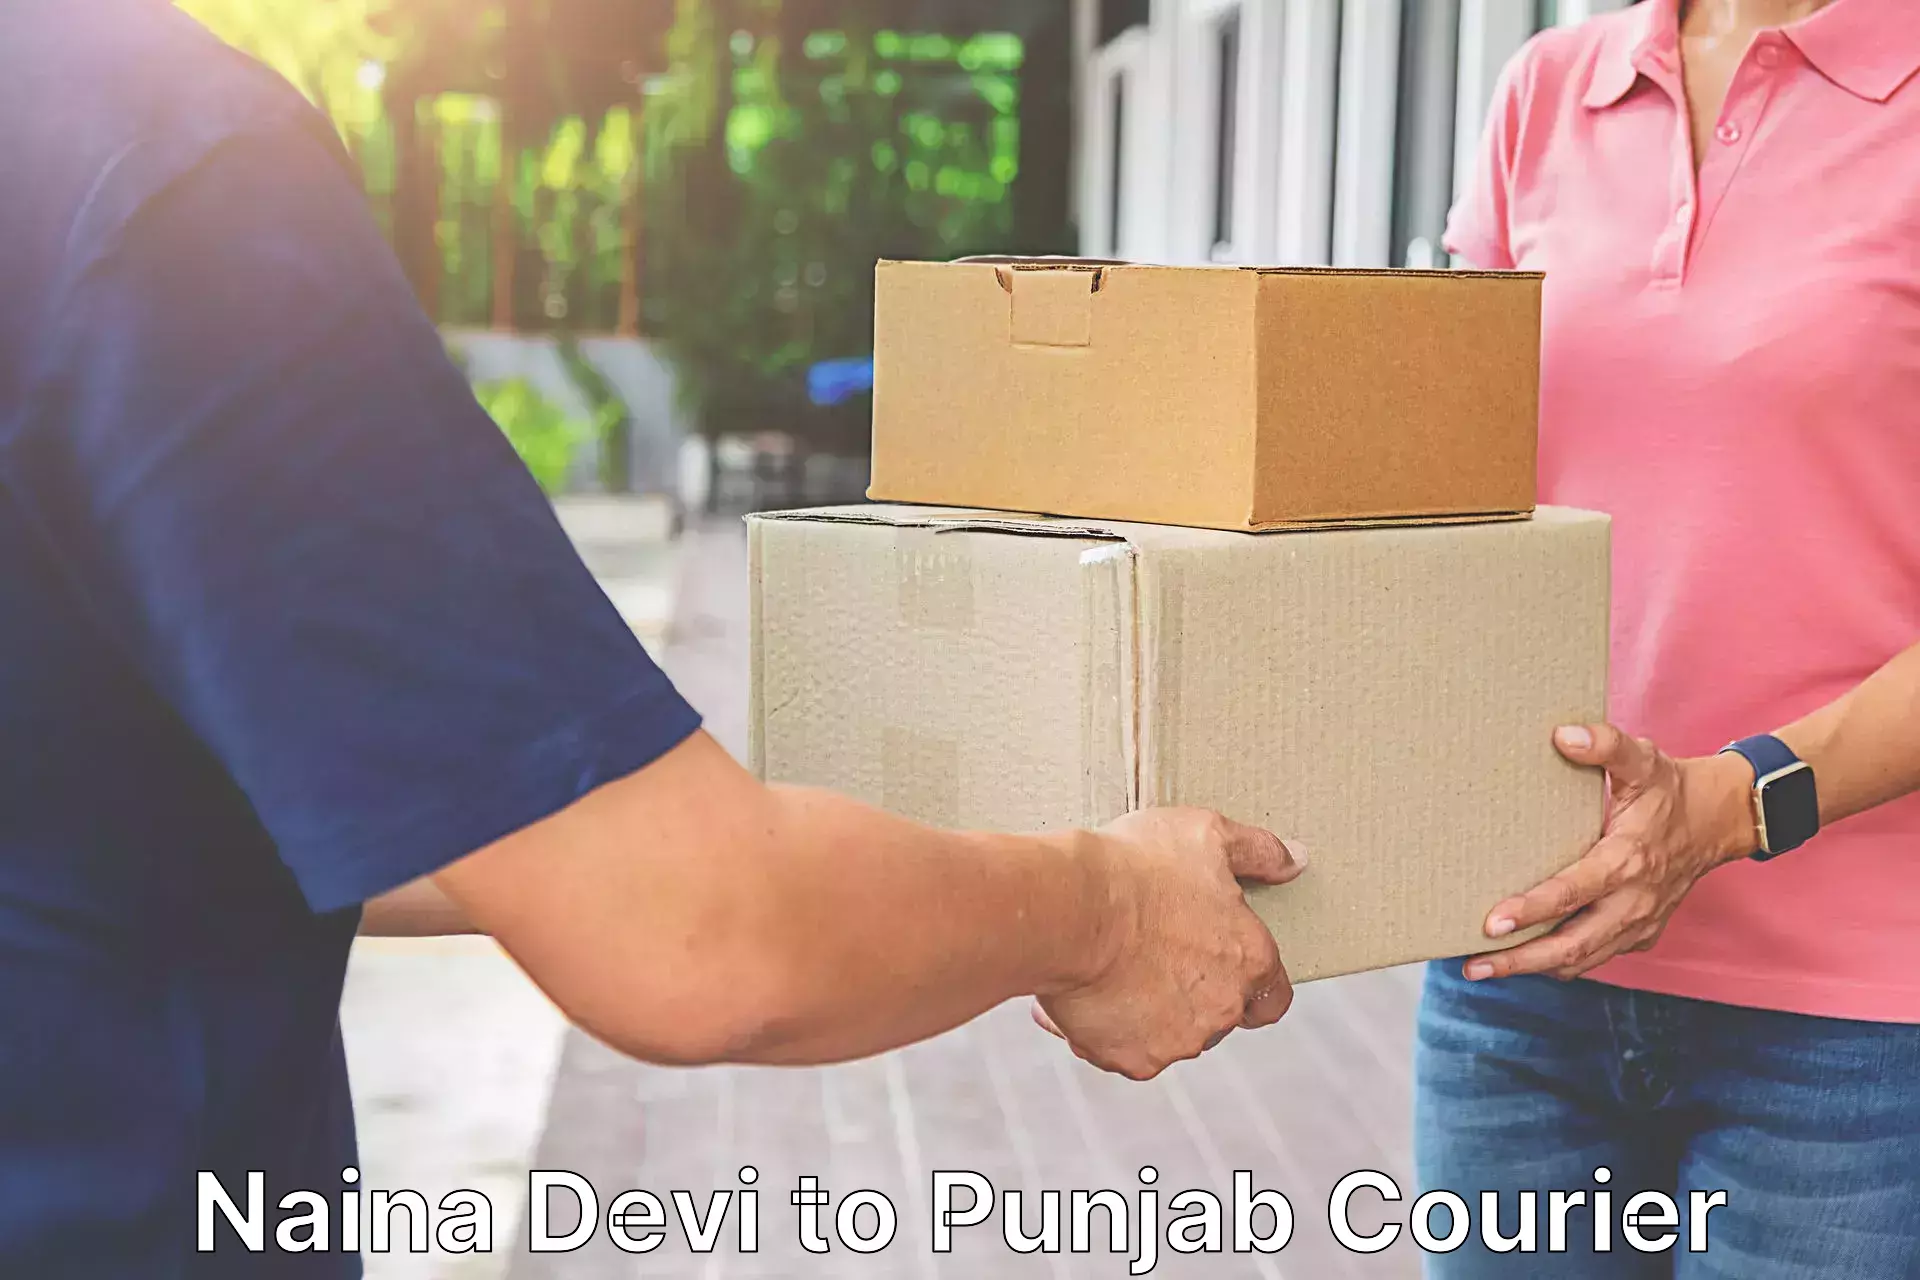 Pharmaceutical courier Naina Devi to Punjab